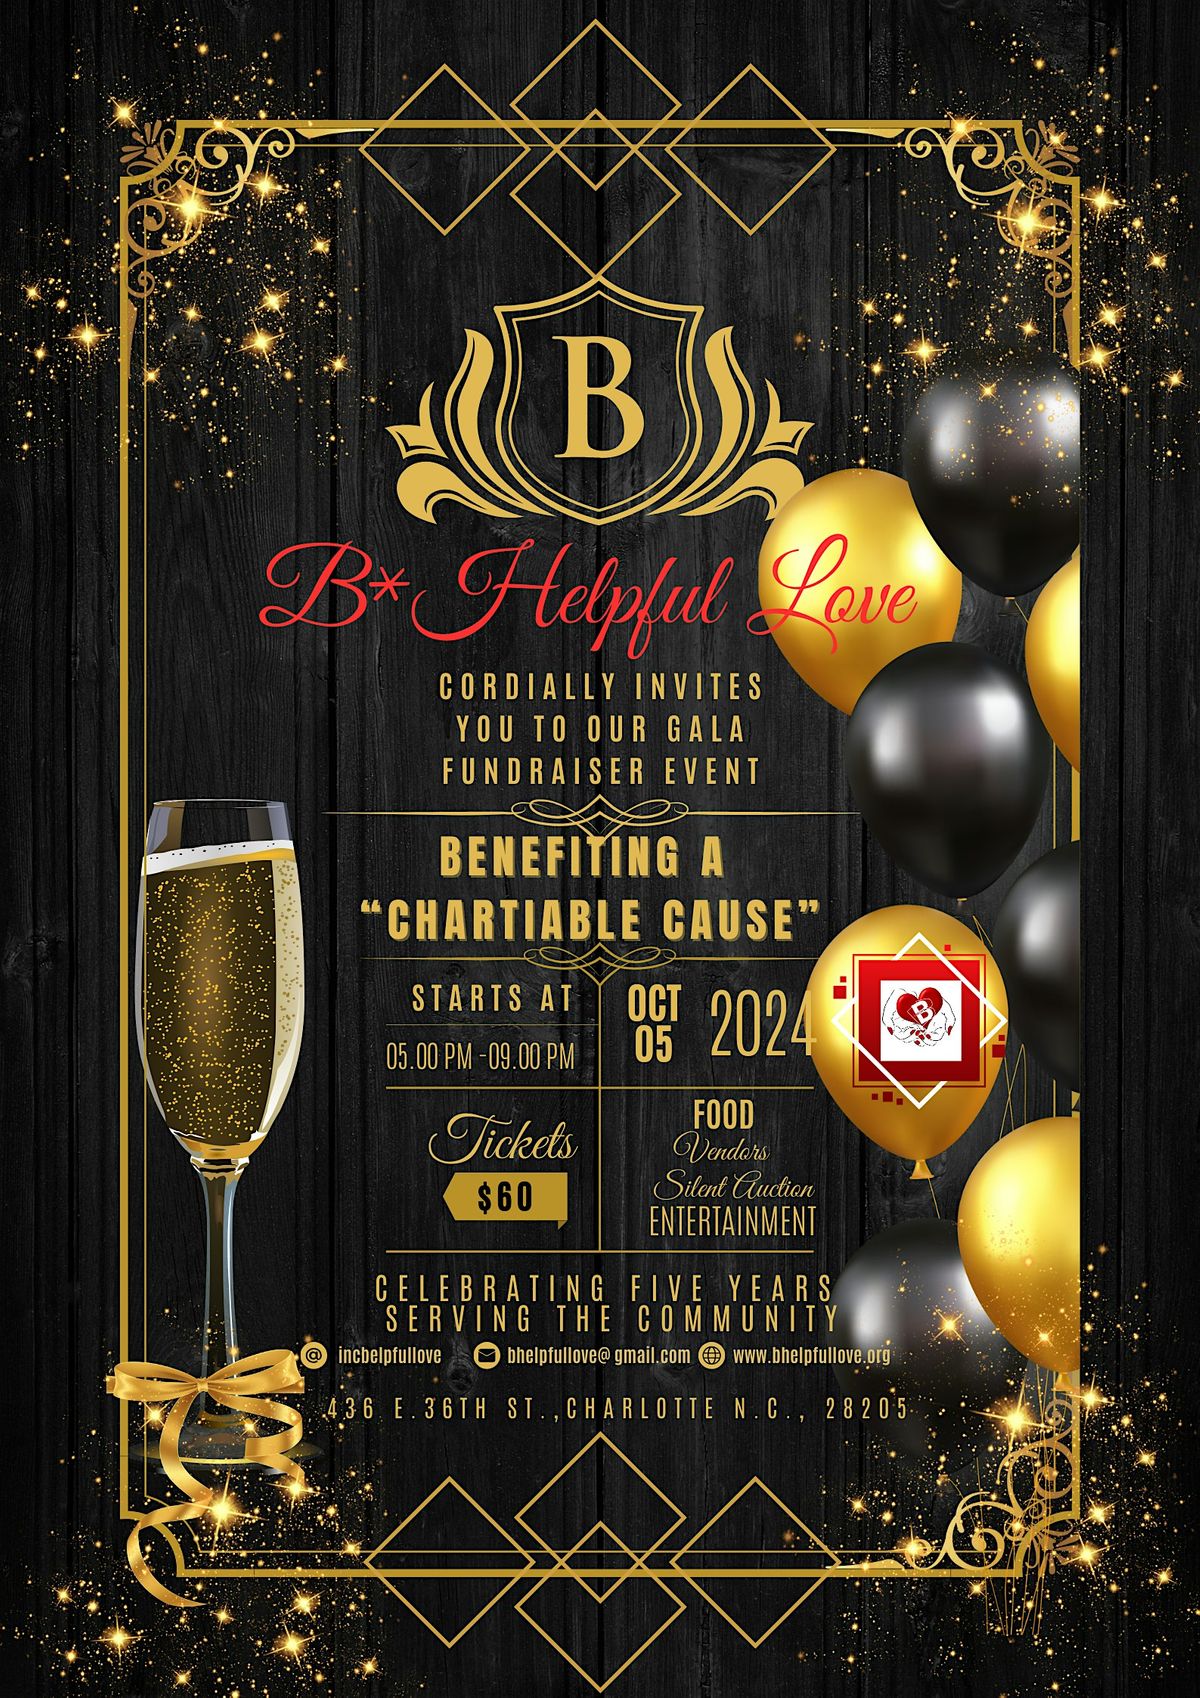 B* Helpful Love Fundraiser Gala Event